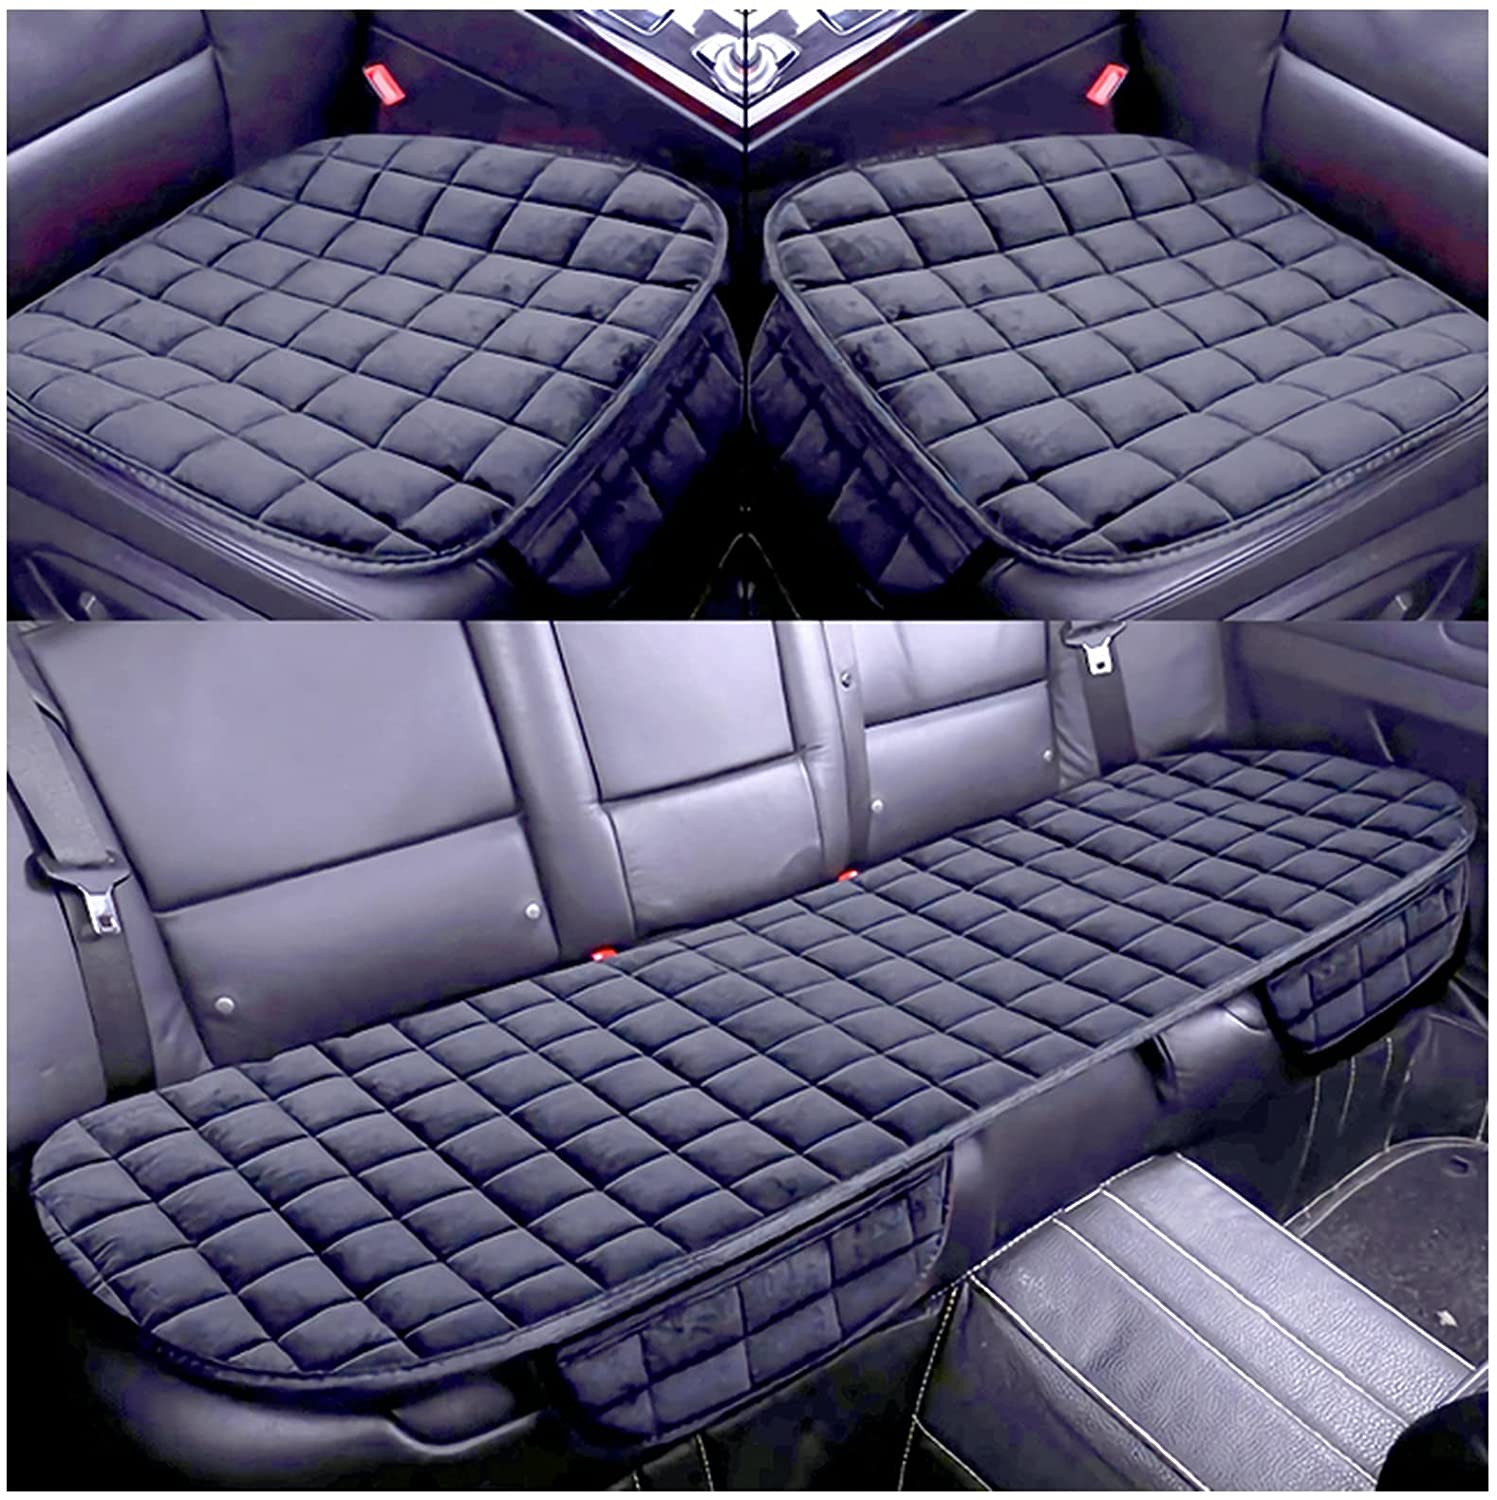 bamutech Seat Cushion Car Seat Cover Fit Truck SUV Van Front Rear Flake Cloth Cushion Non-Slip Winter Car Protector Mat Pad Keep Warm Universal Seat Cushion Chair (Size: Black 3pcs)